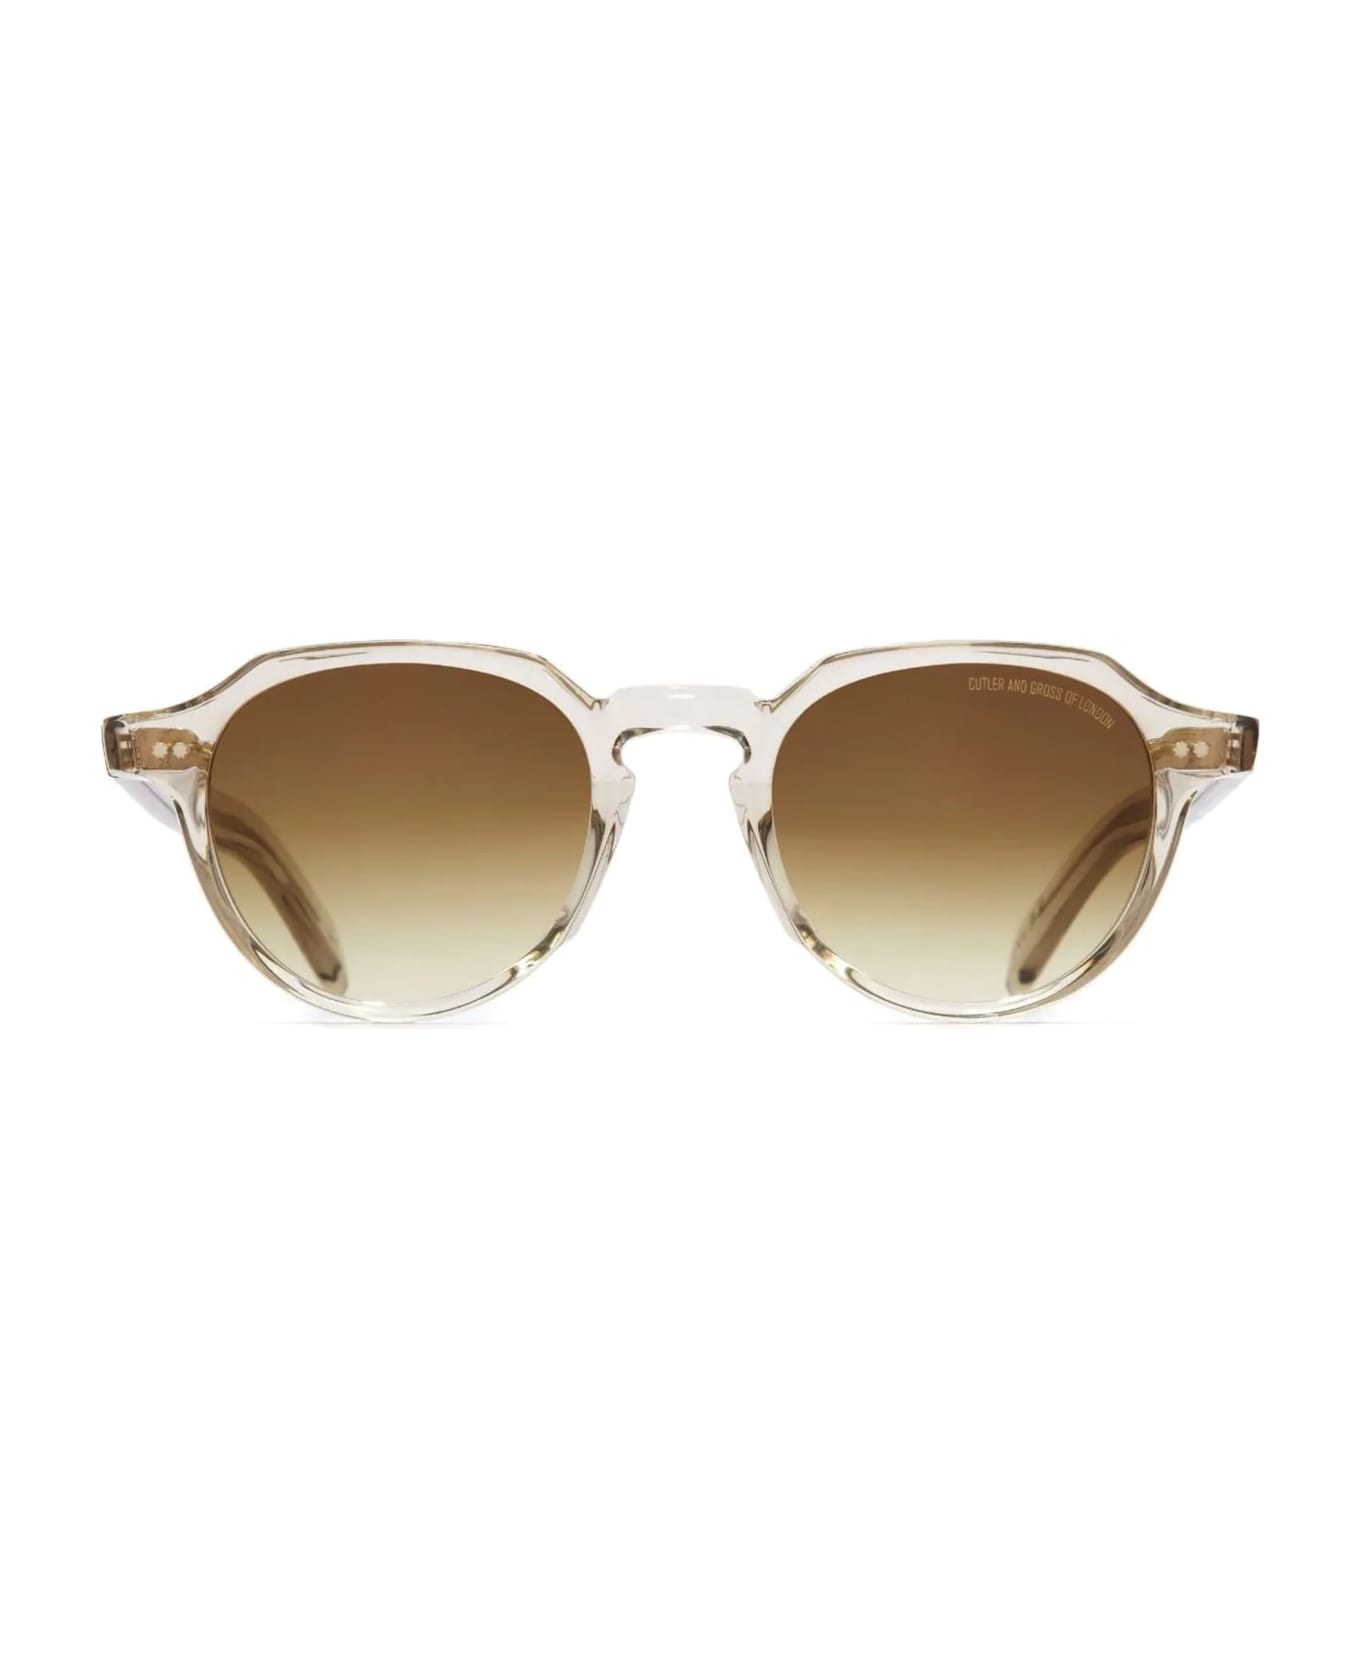 Cutler and Gross Gr06 / Sand Crystal Sunglasses - beige サングラス